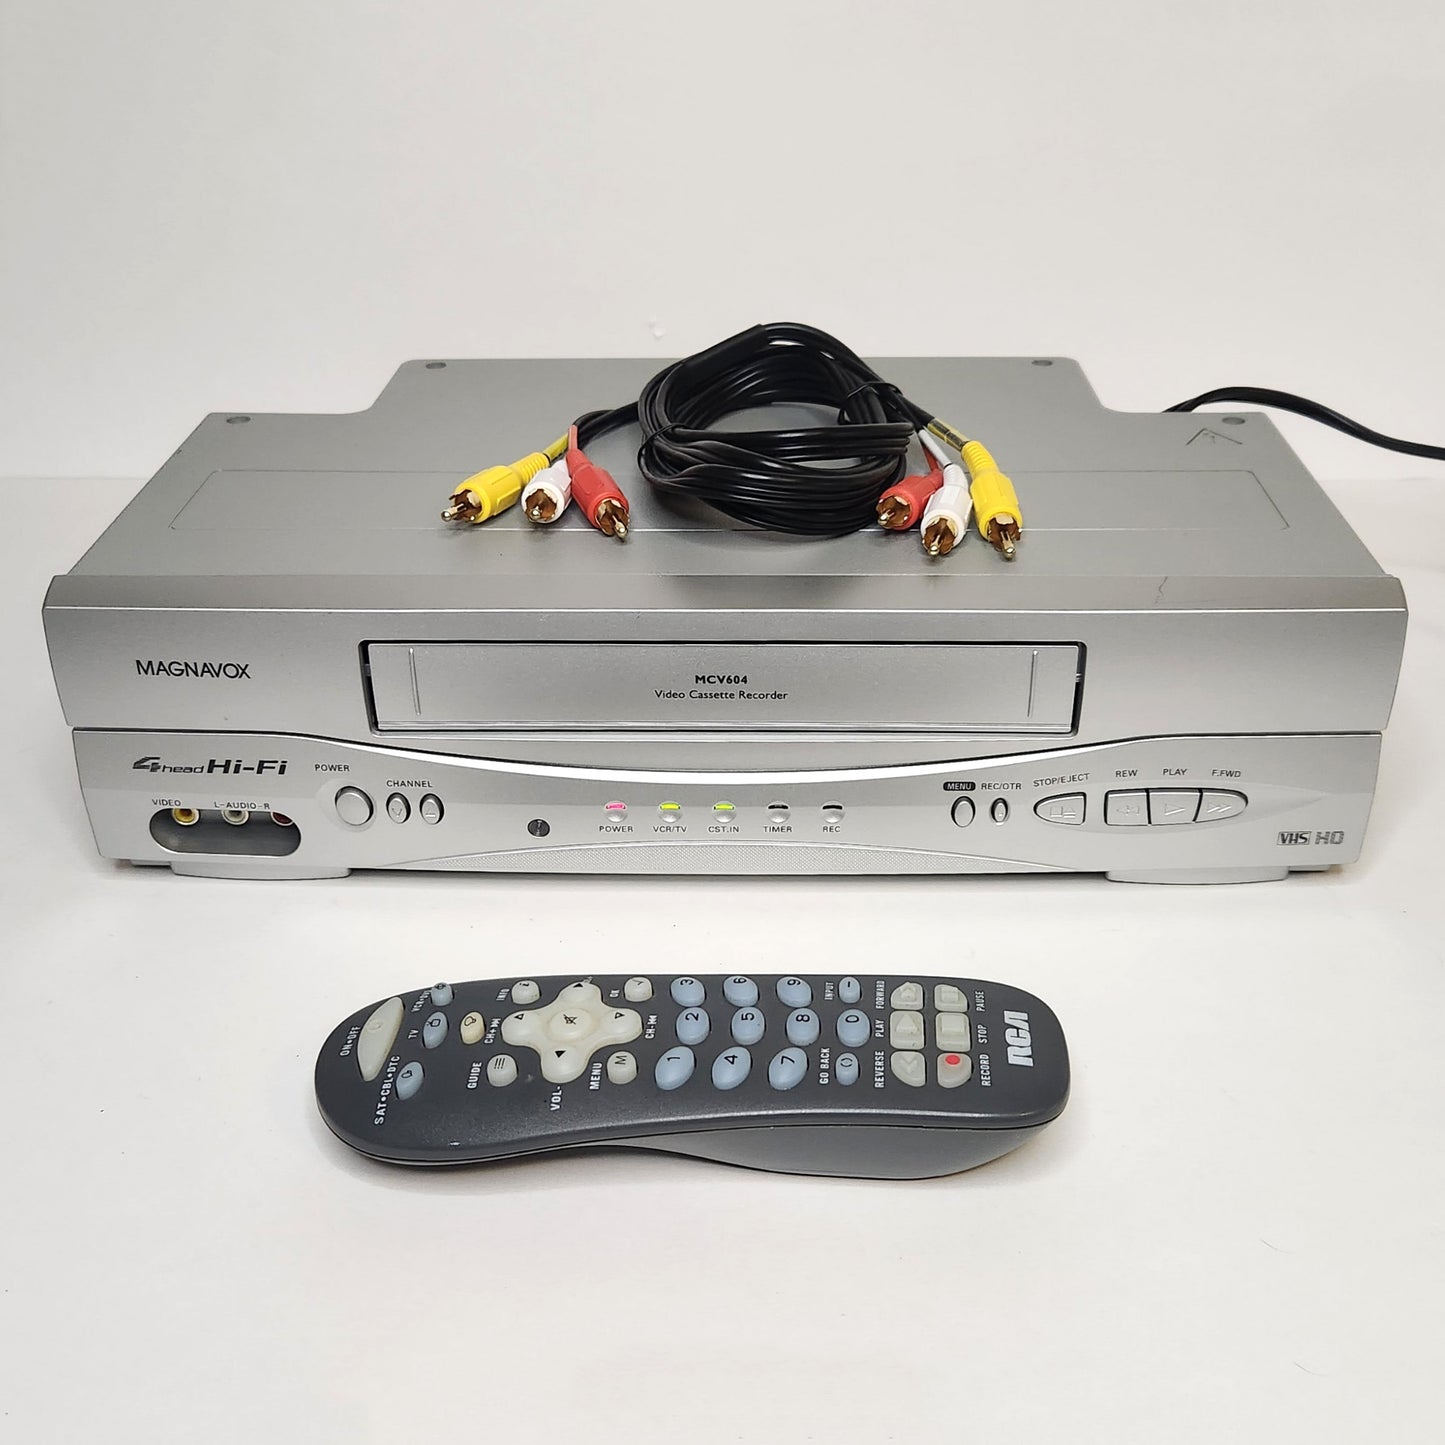 Magnavox MCV604 VCR, 4-Head Hi-Fi Stereo